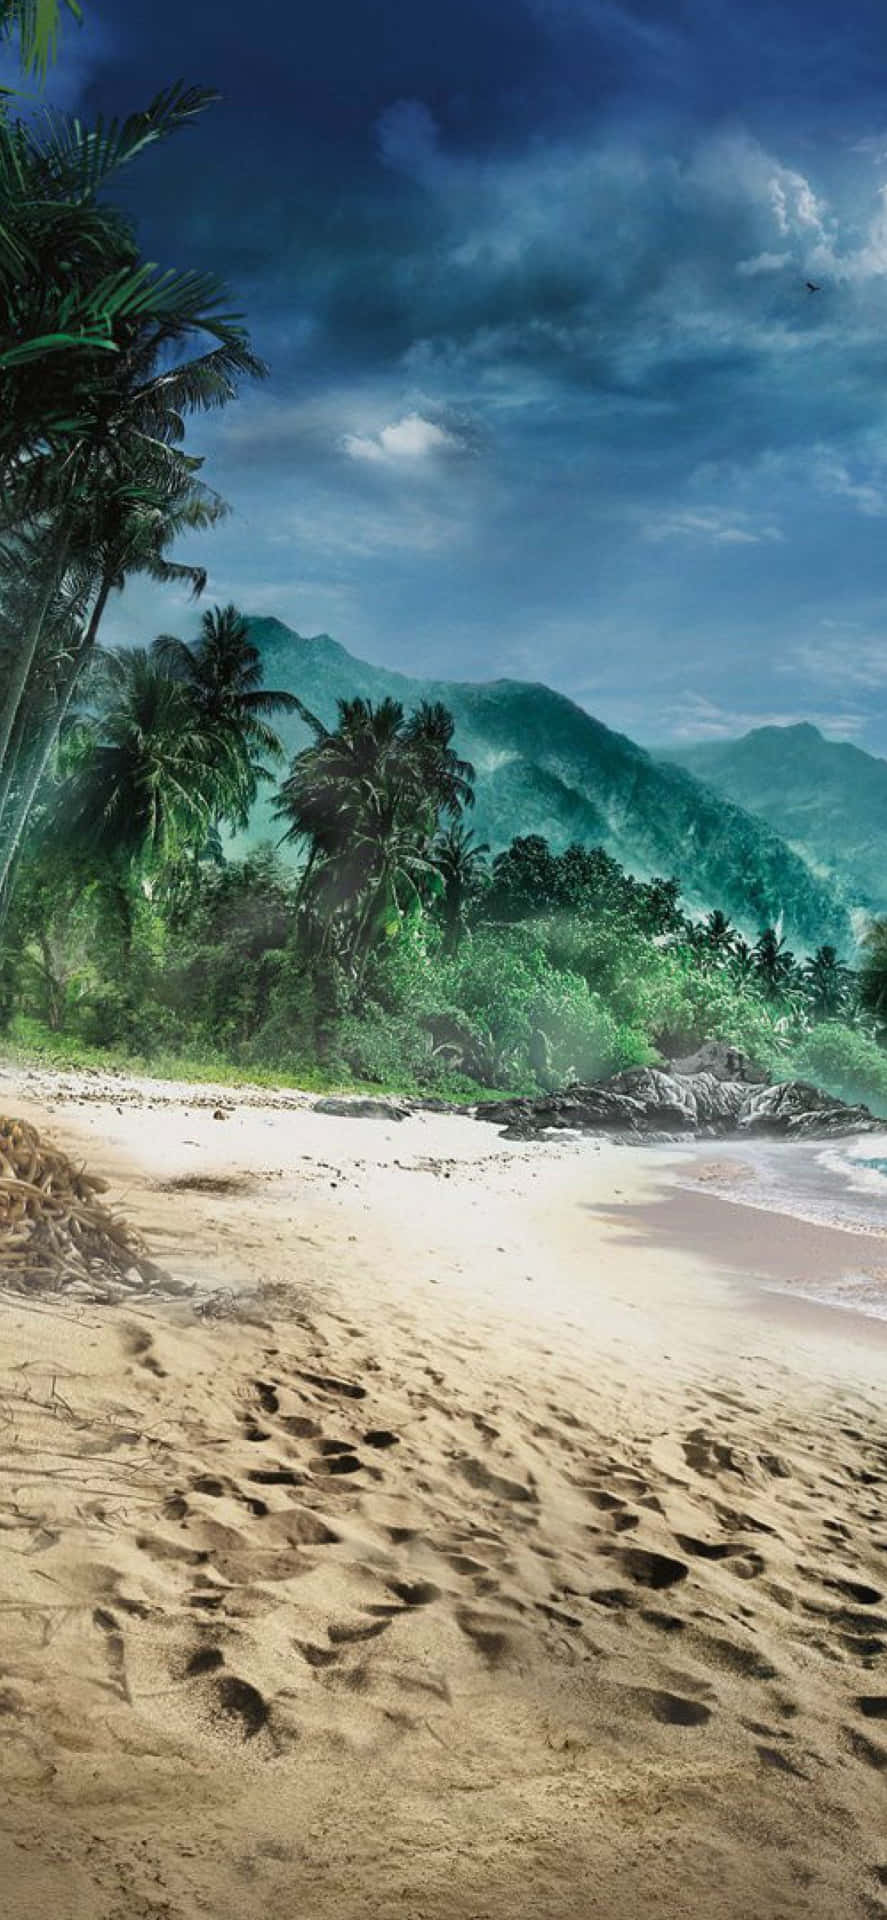 Iphonexs Max Far Cry 3 Bakgrund Rook Island Fotspår.